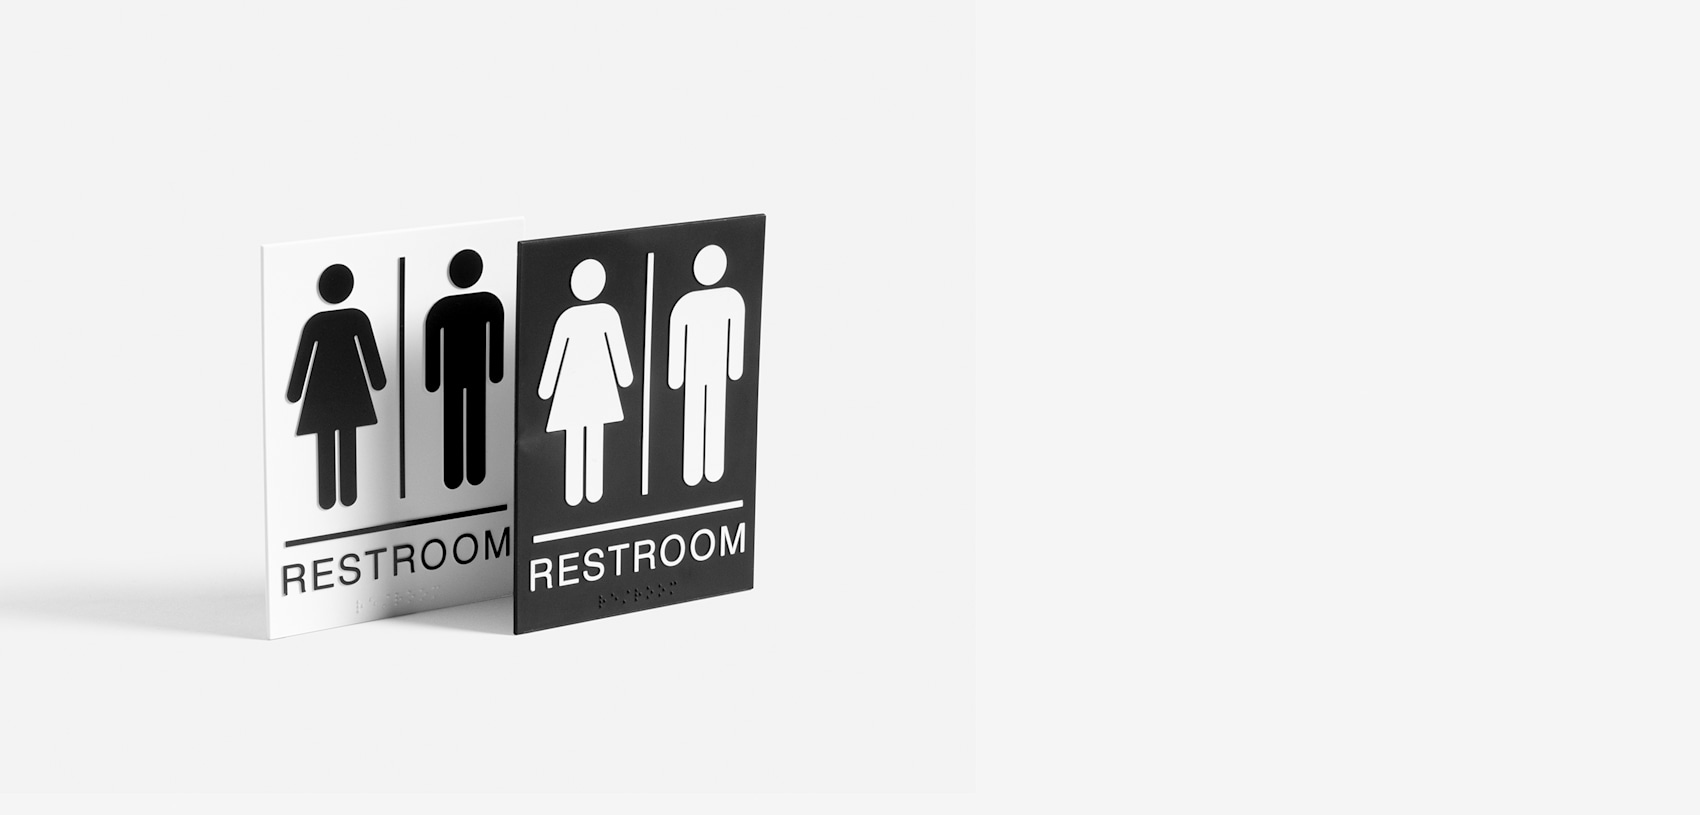 Larger version: bathroom signs